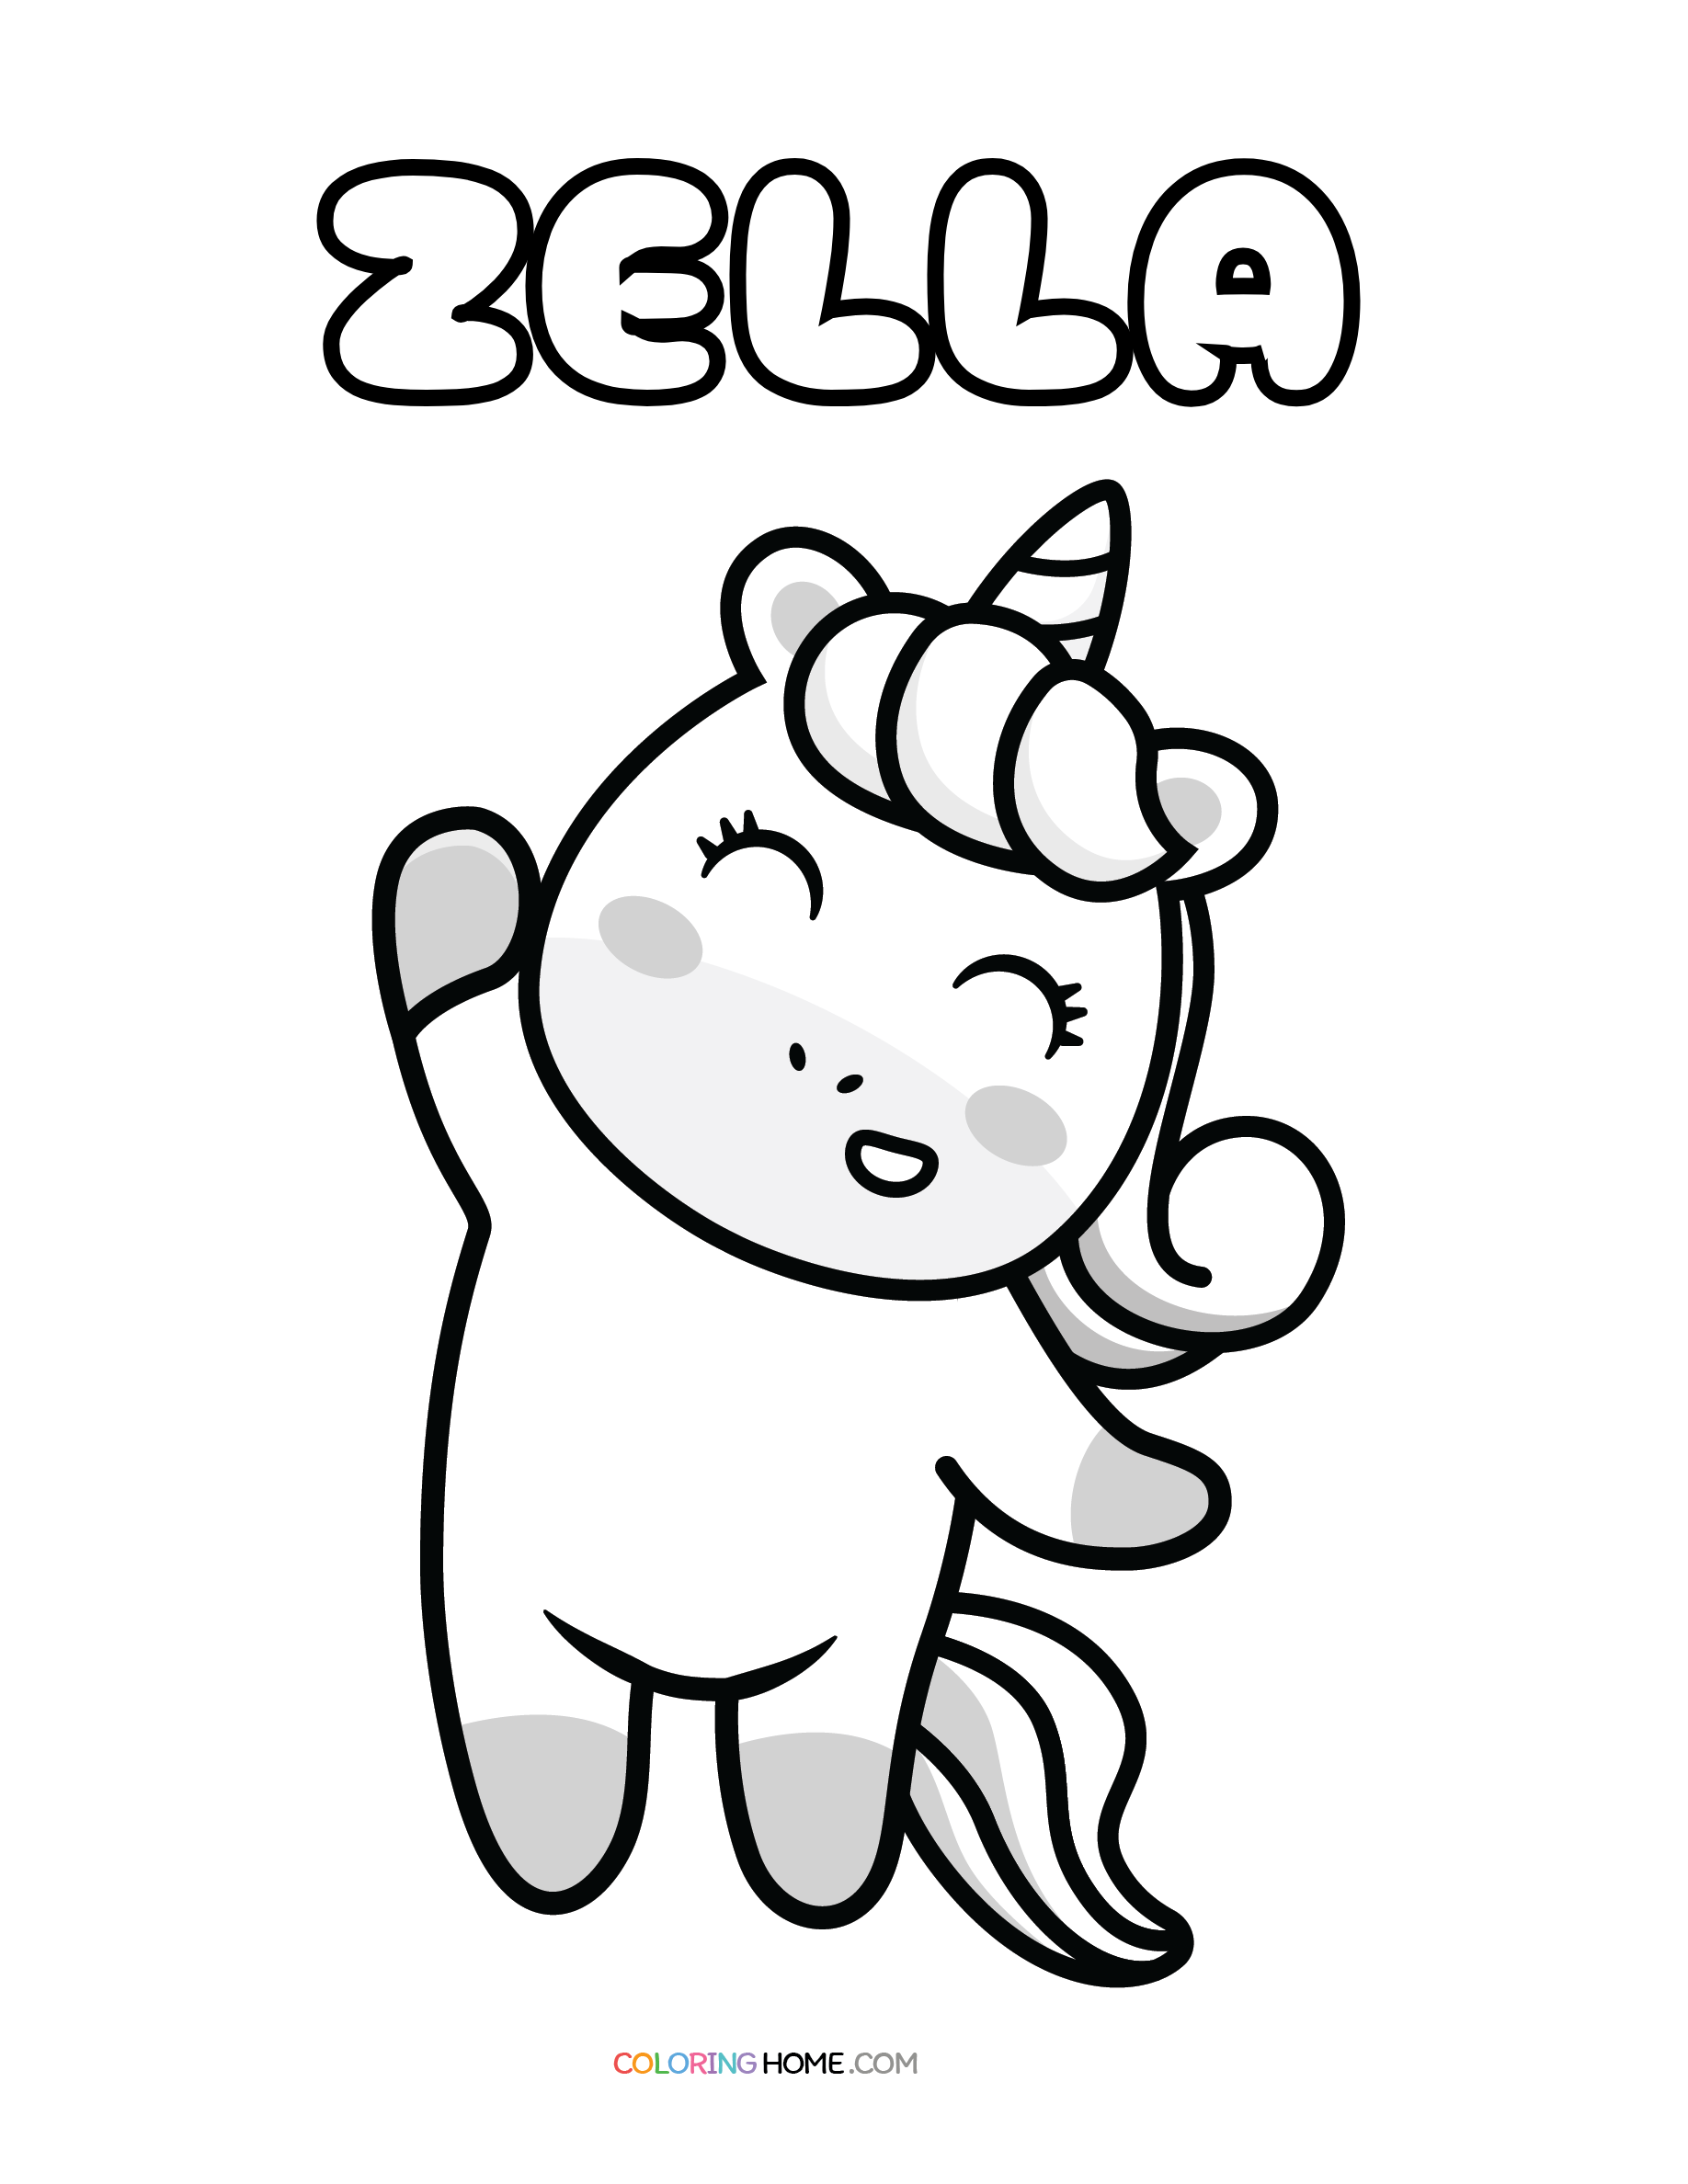 Zella unicorn coloring page